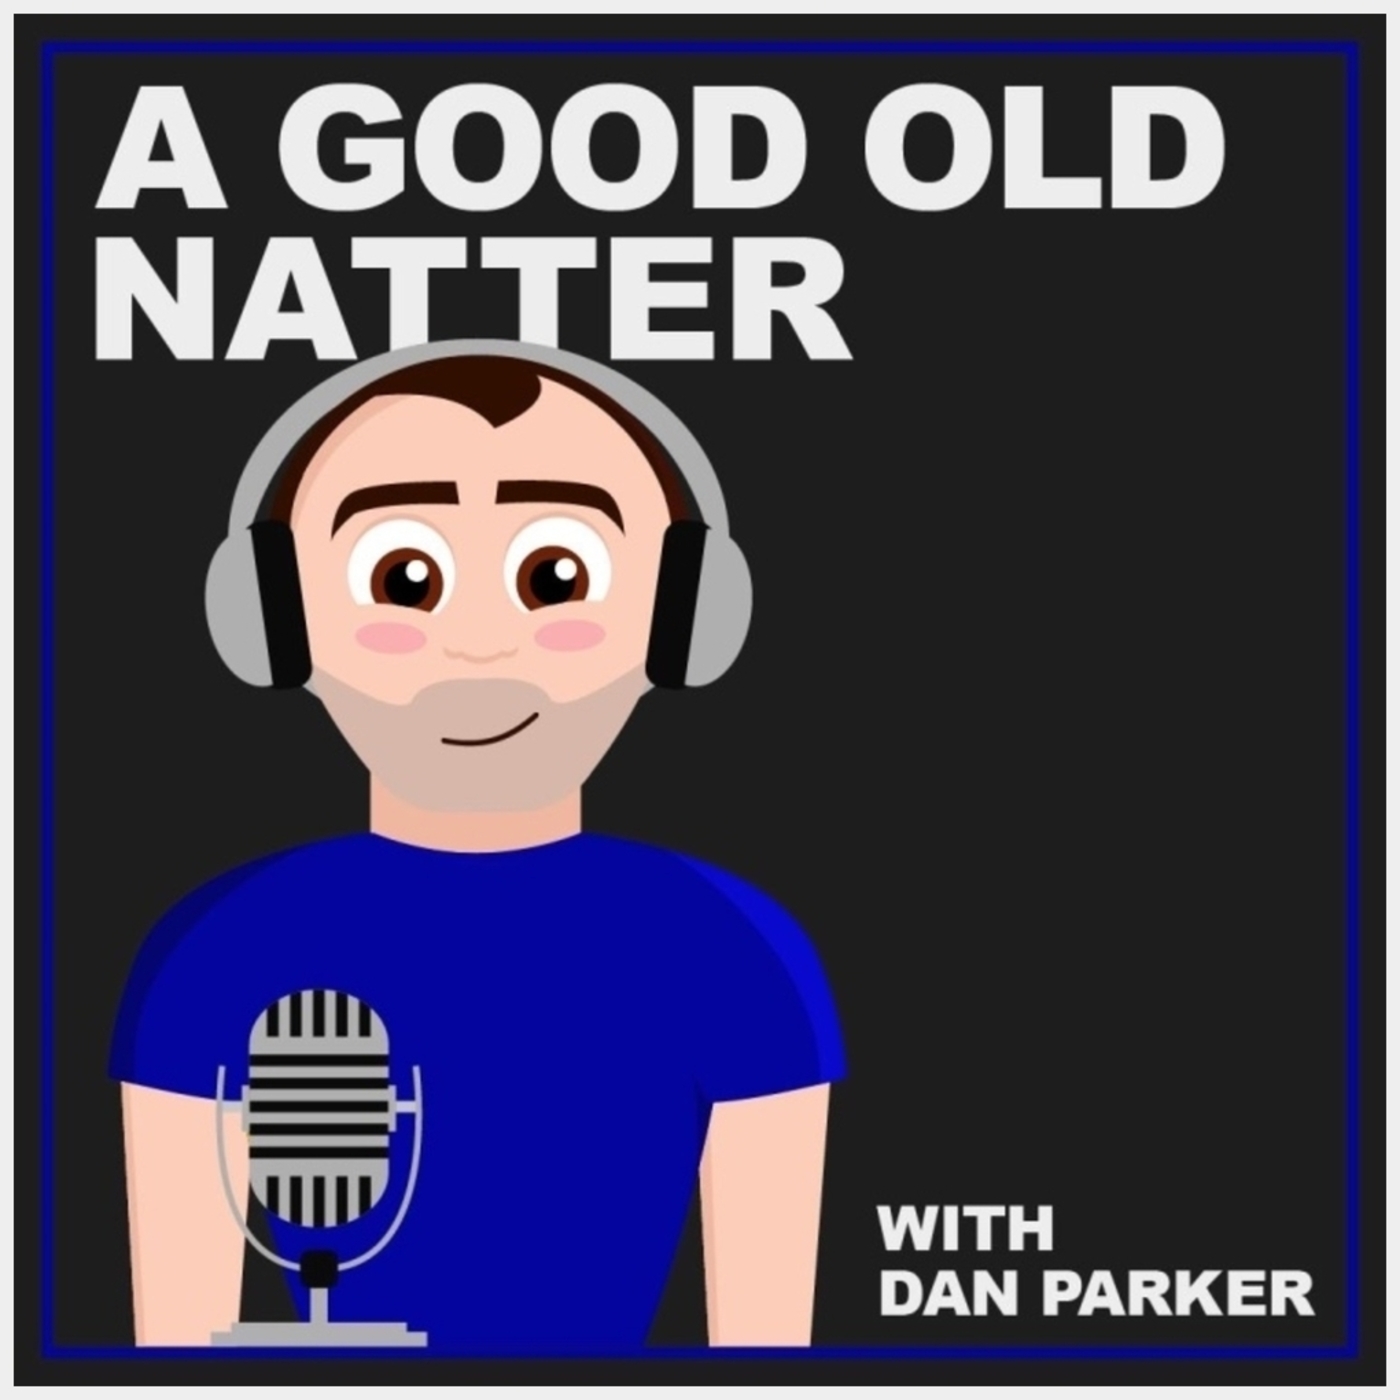 A Good Old Natter......with Dan Parker